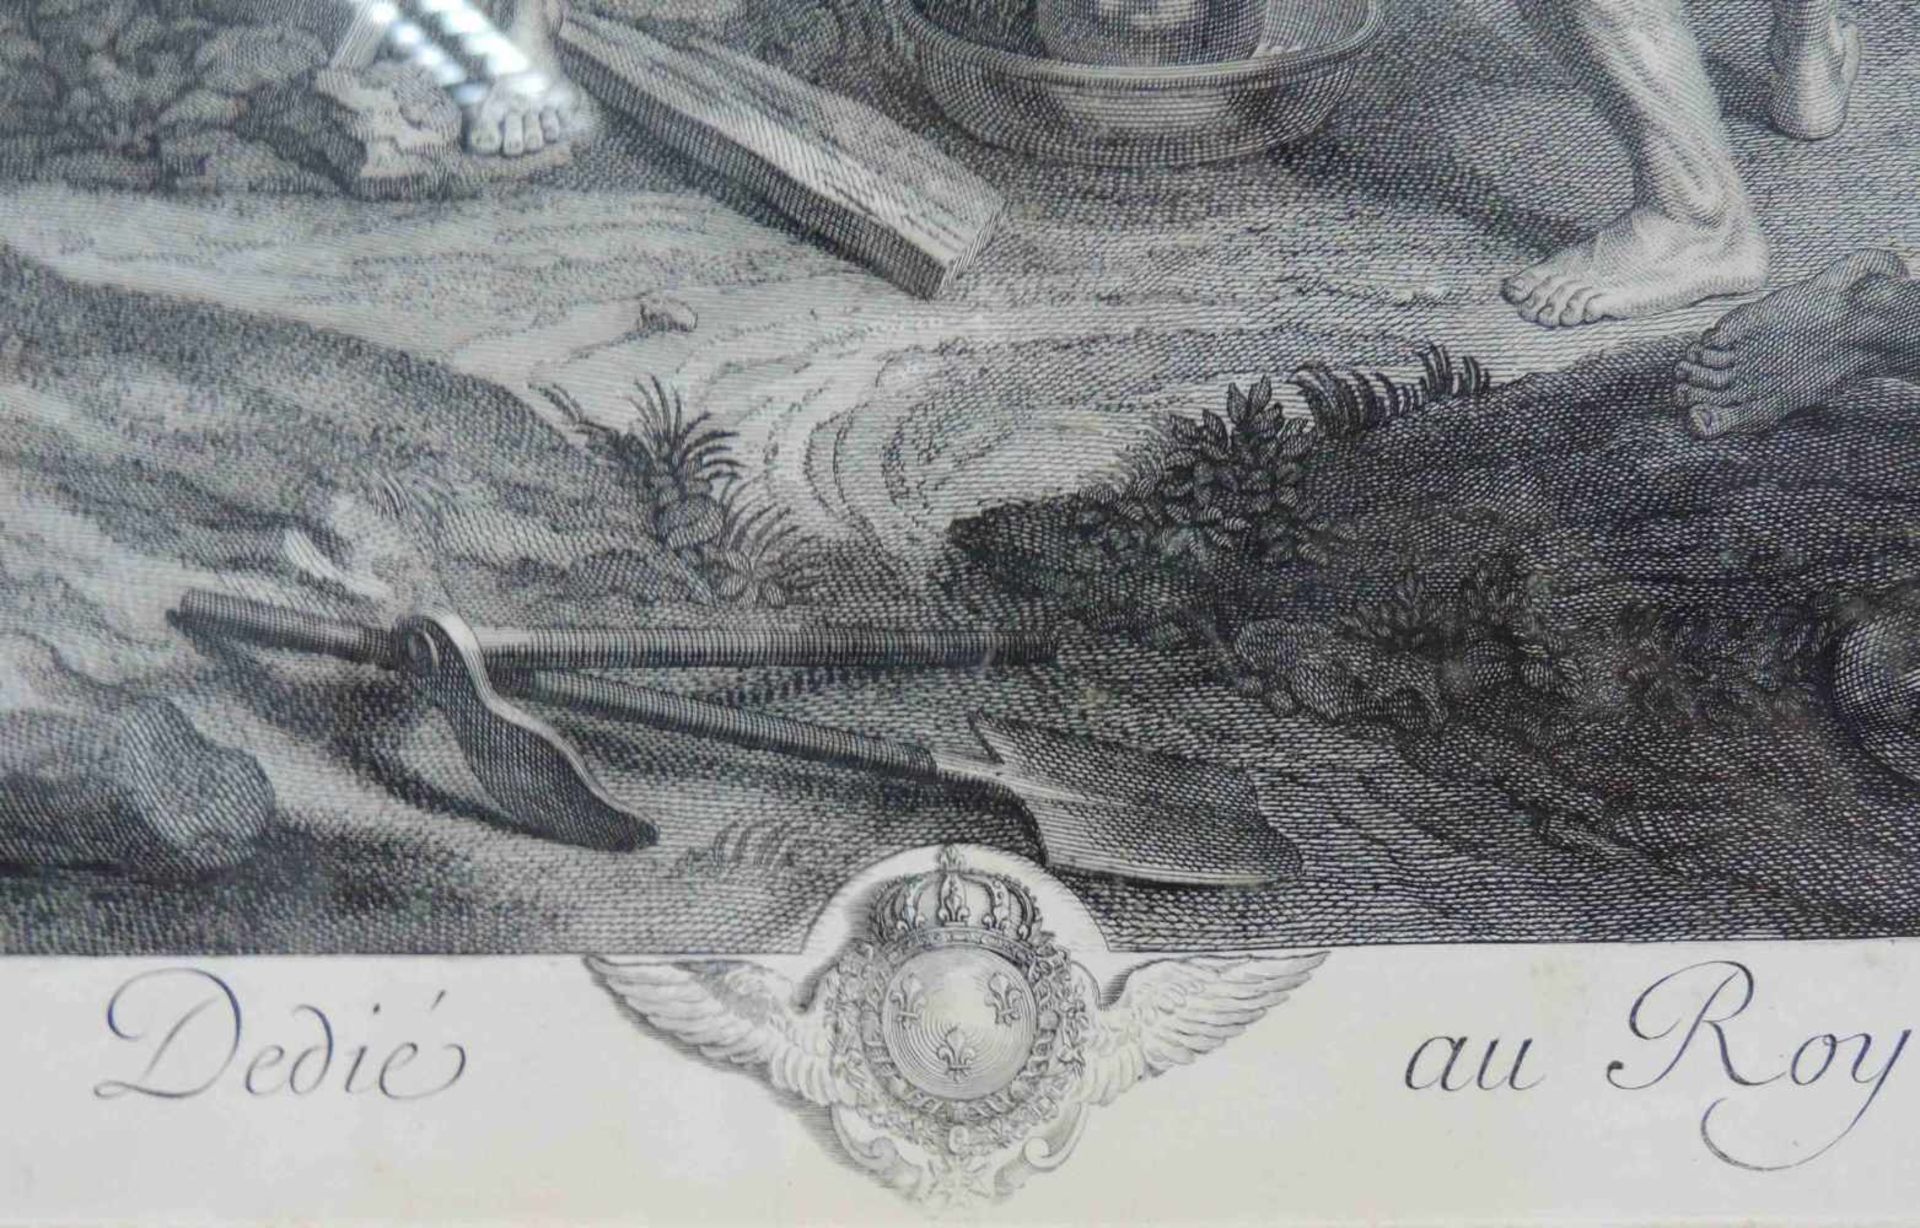 Gérard AUDRAN (1640 - 1703), nach Charles LEBRUN (1619 - 1690). Dediè au Roy. 575 mm x 747 mm die - Image 5 of 6